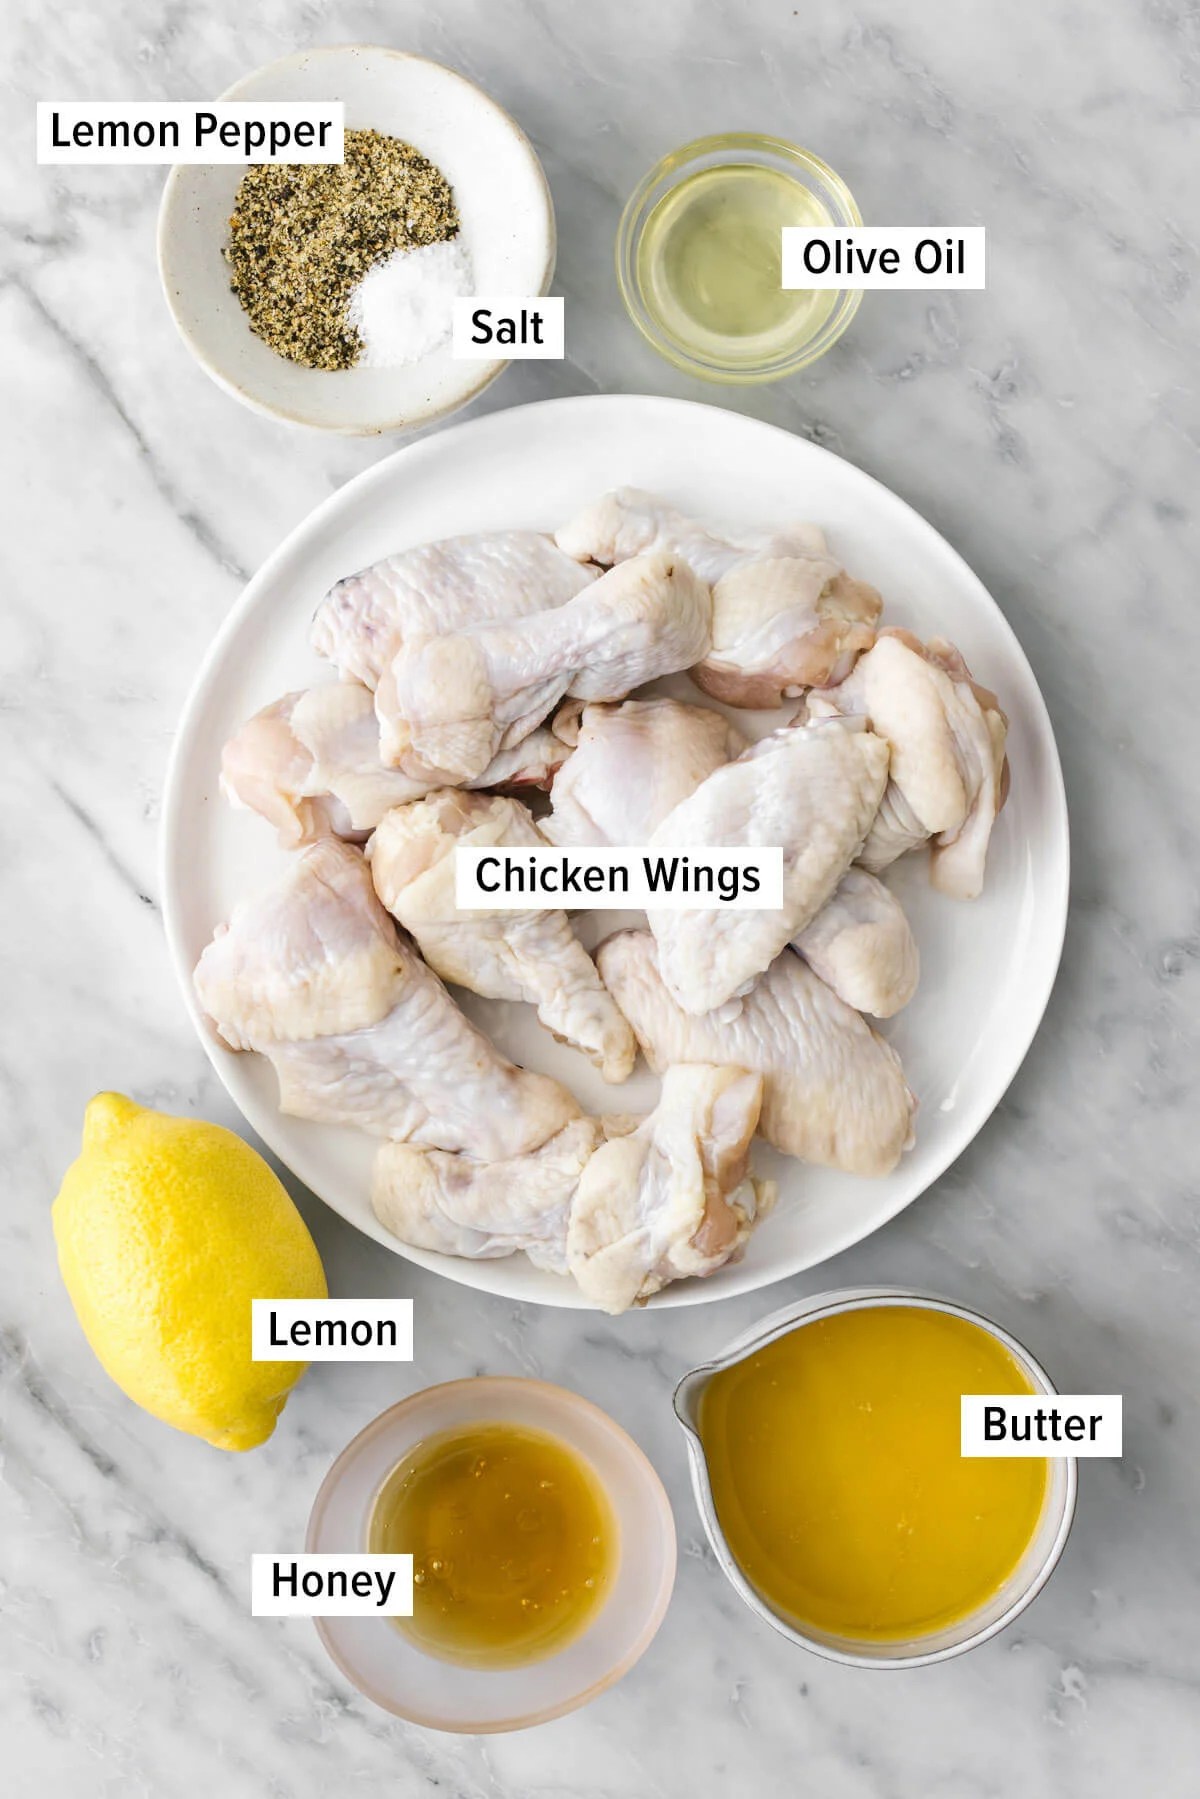 Ingredients for lemon pepper air fryer chicken wings on a plate